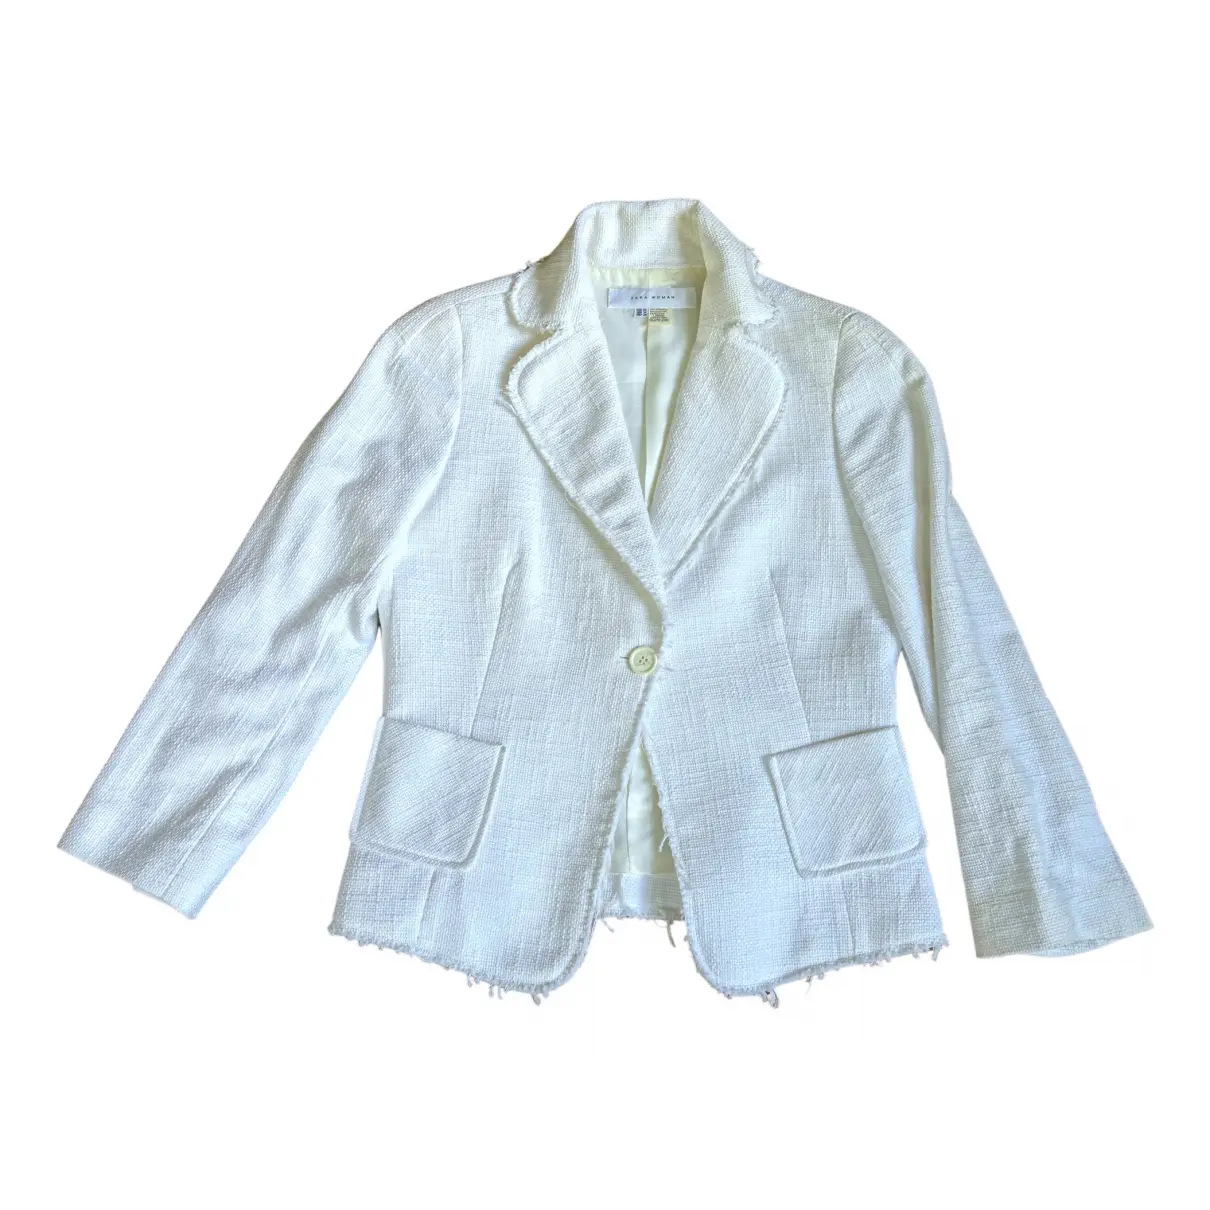 White Tweed Jacket Zara